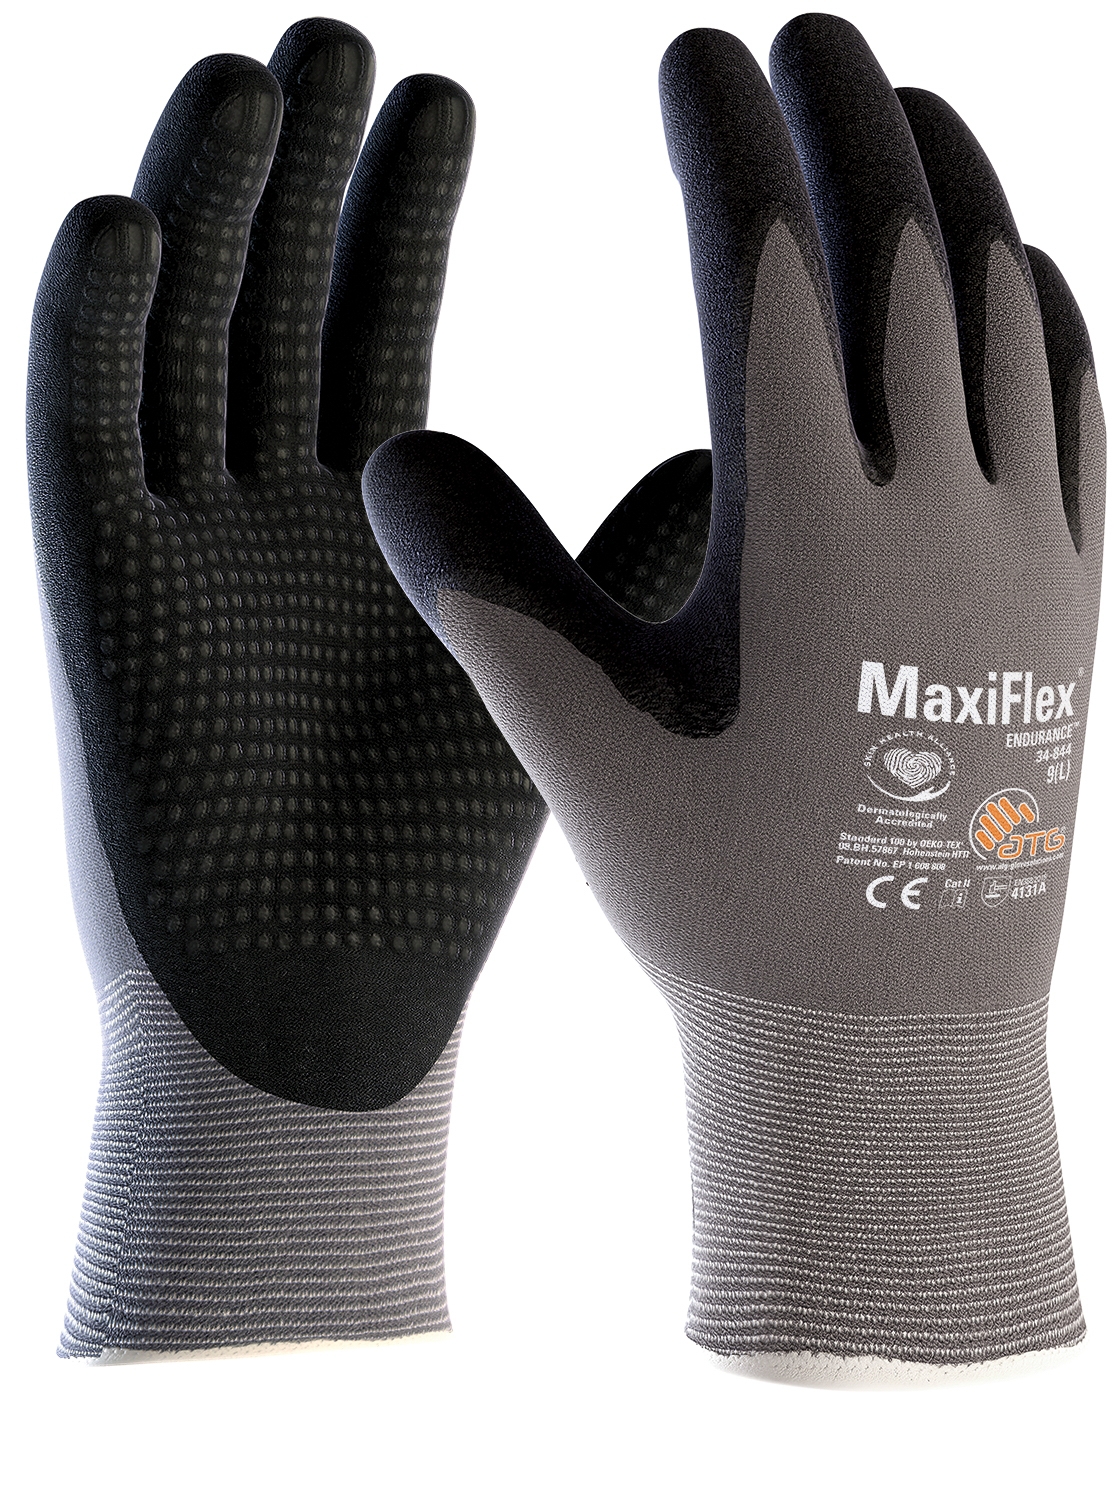 (34-844) ATG® Nylon-Strickhandschuhe grau/schwarz Endurance™ MaxiFlex®